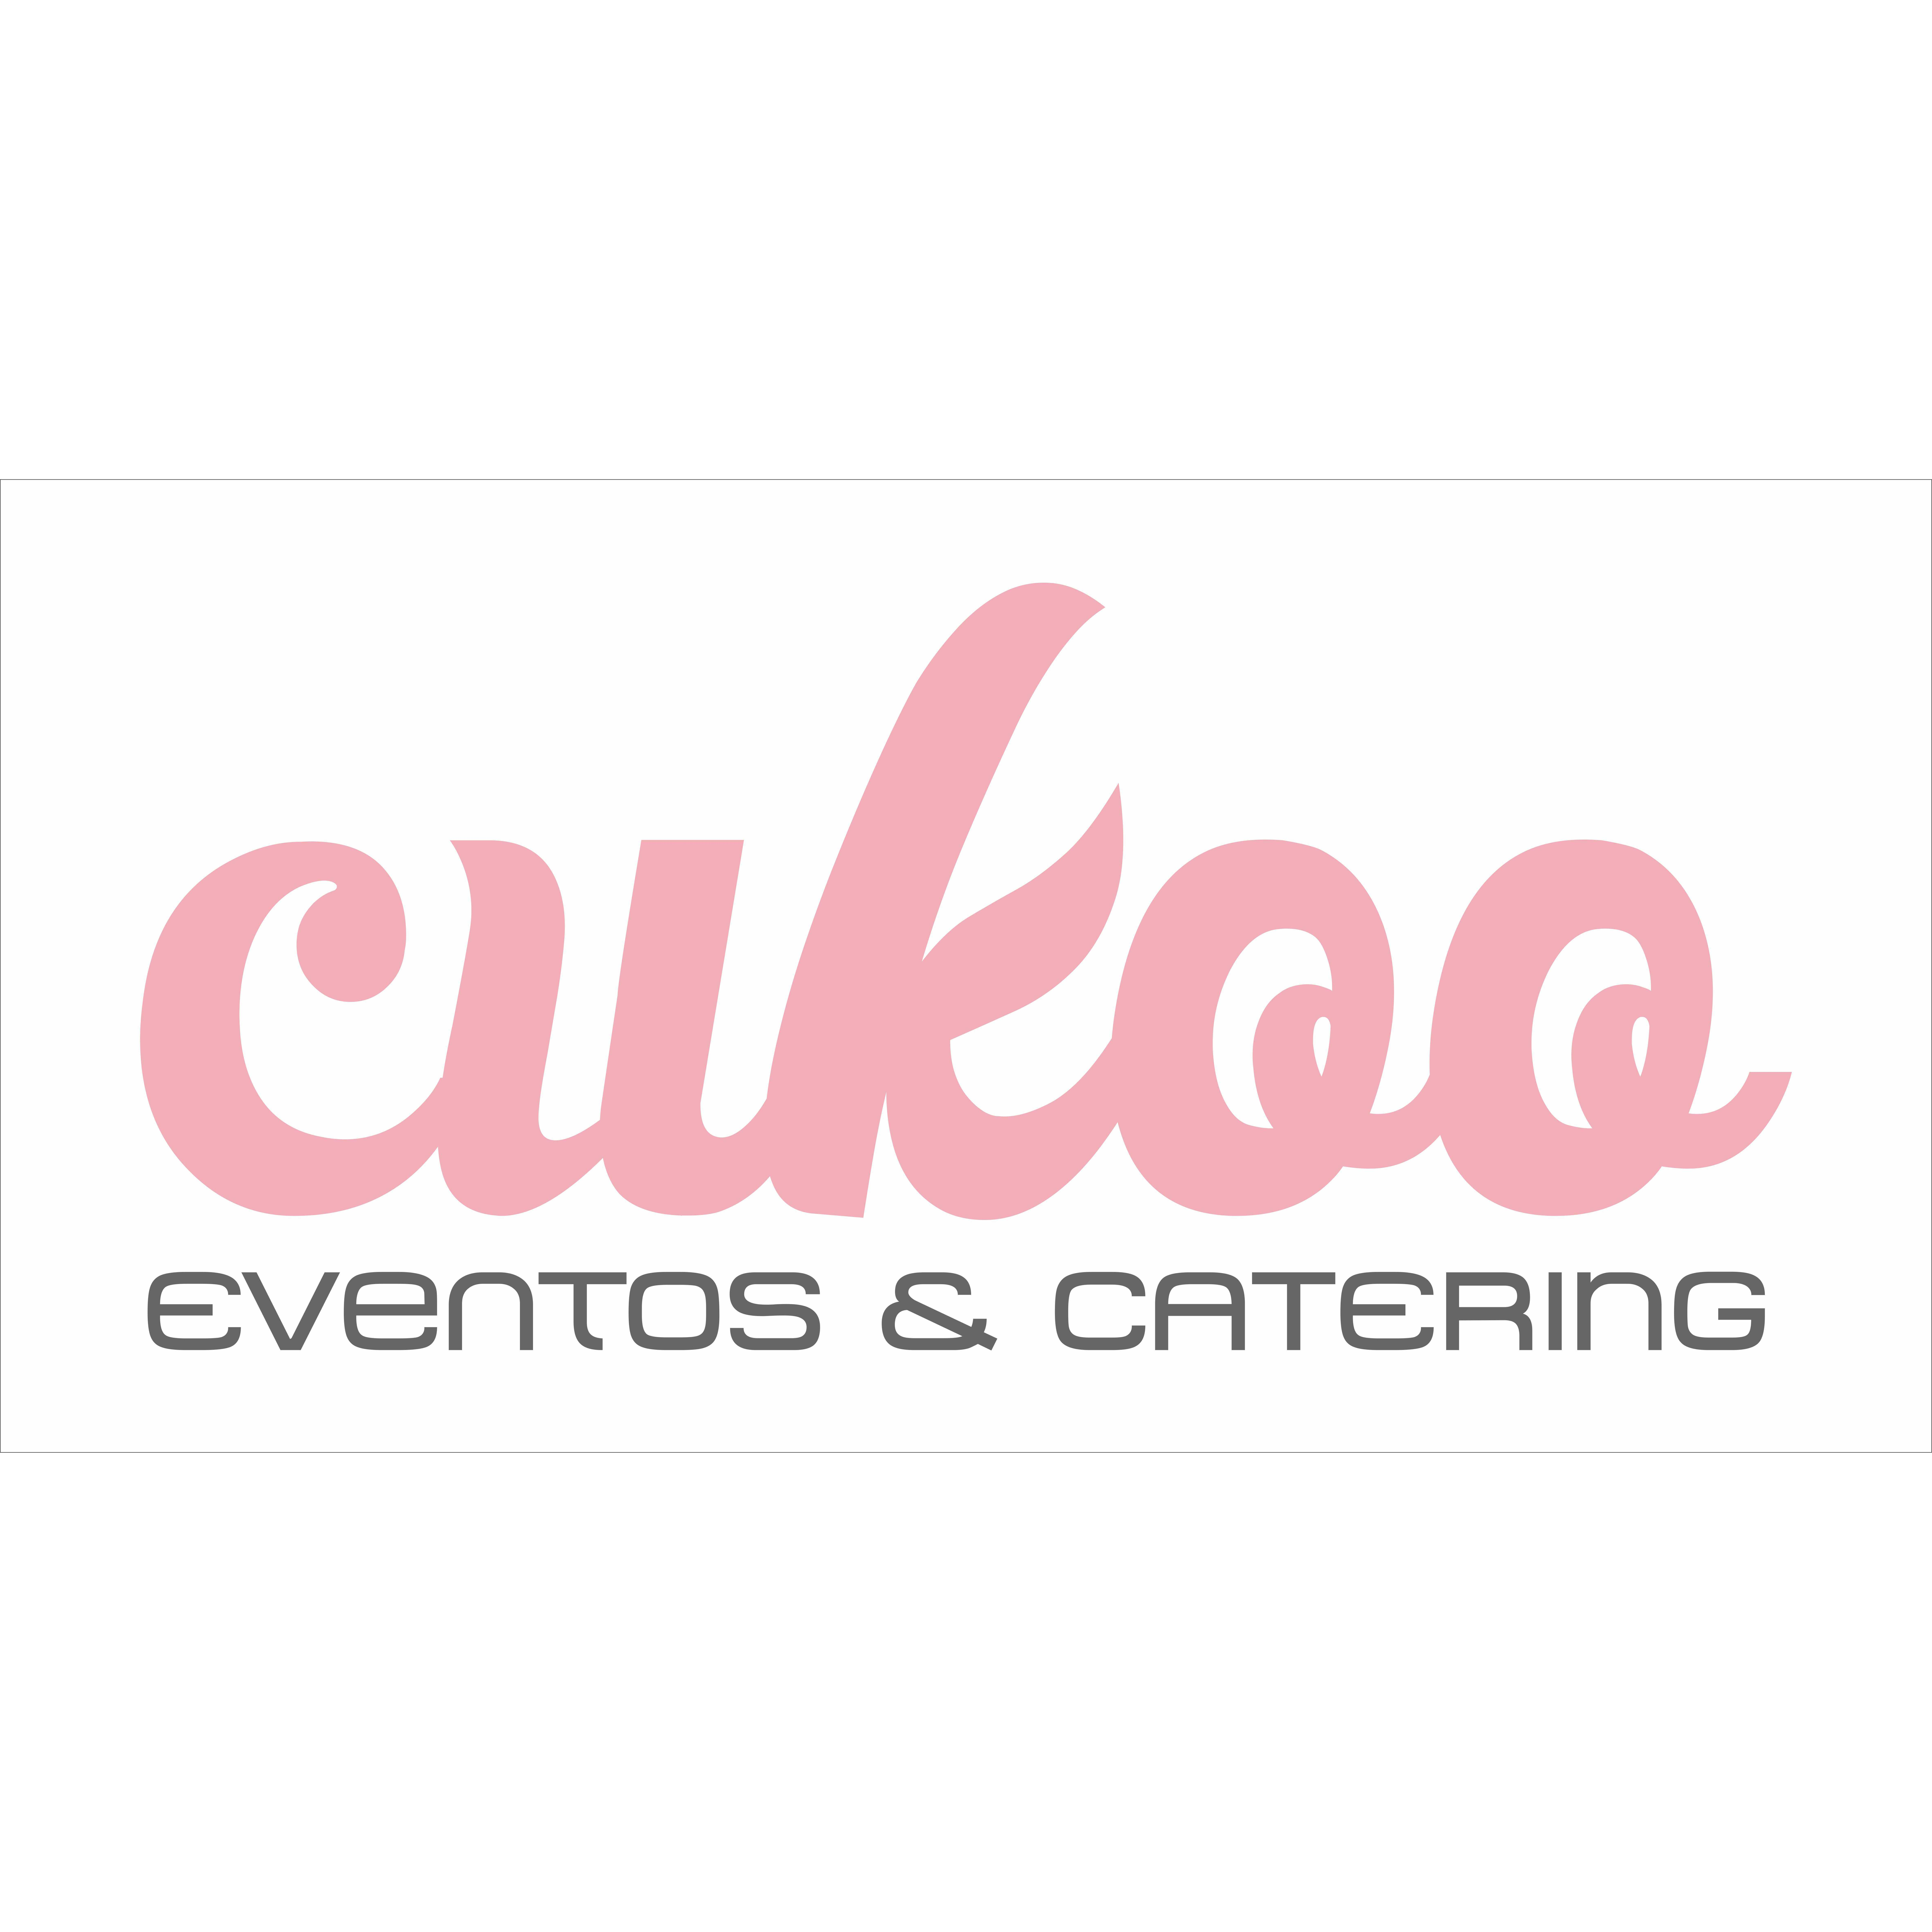 Cukoo Eventos Logo